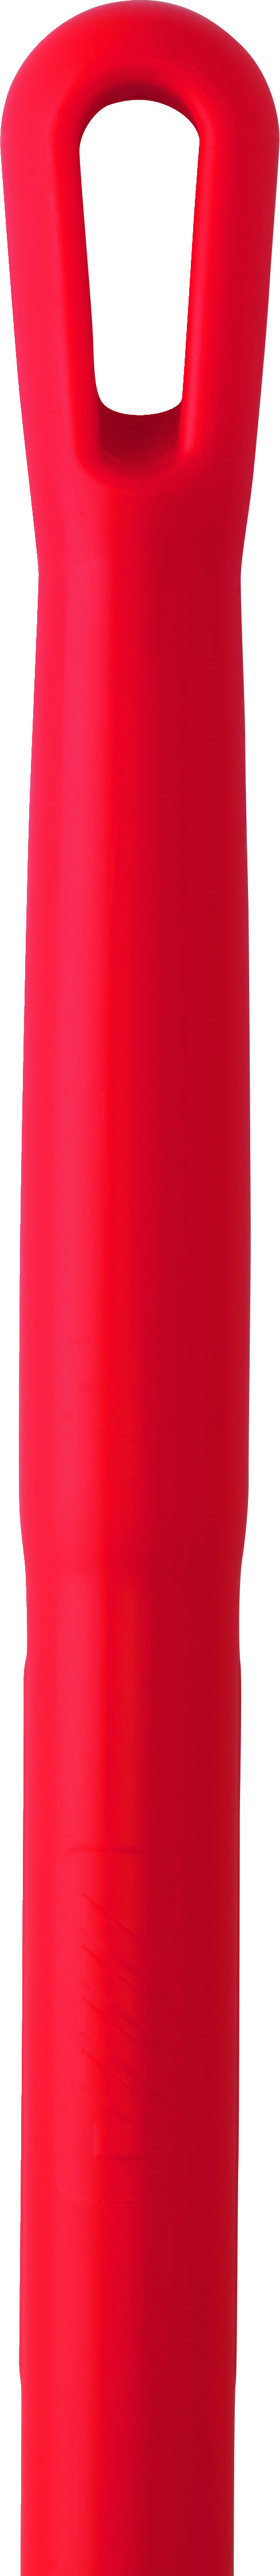 Рукоятка Vikan эргономичная алюминиевая, 1510 мм, красная